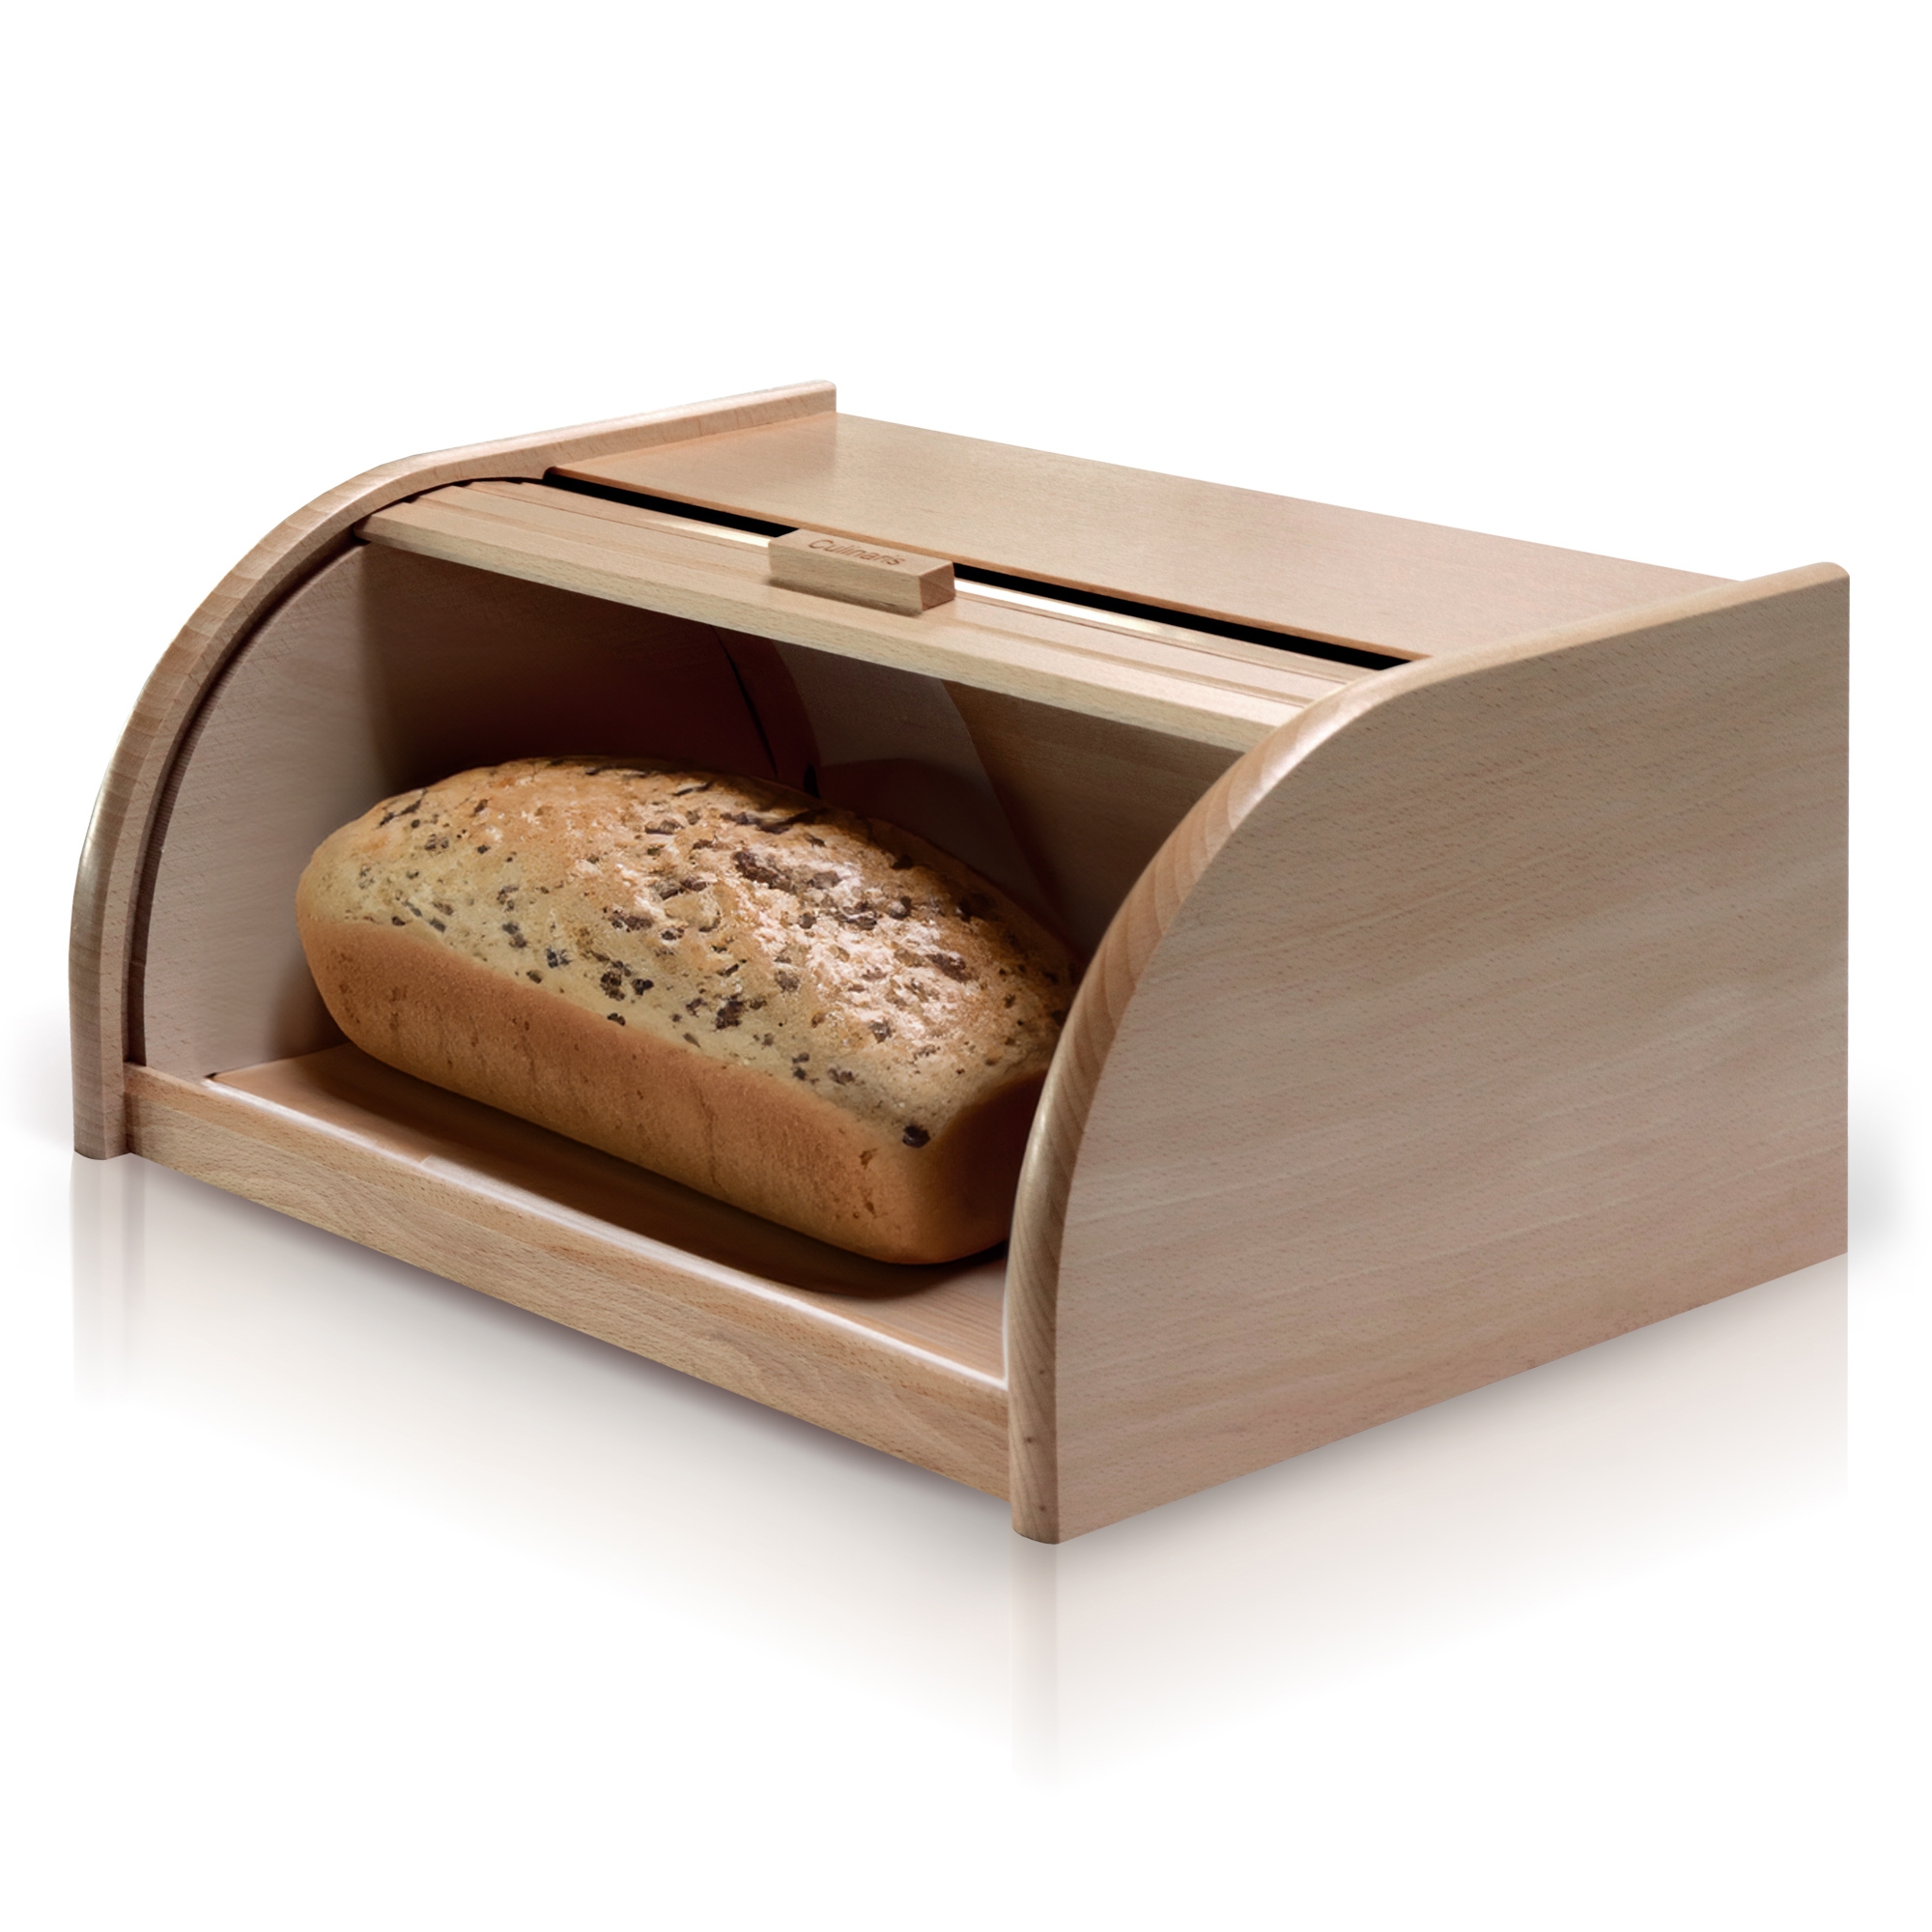 Culinaris - Bread Bin made of beech wood